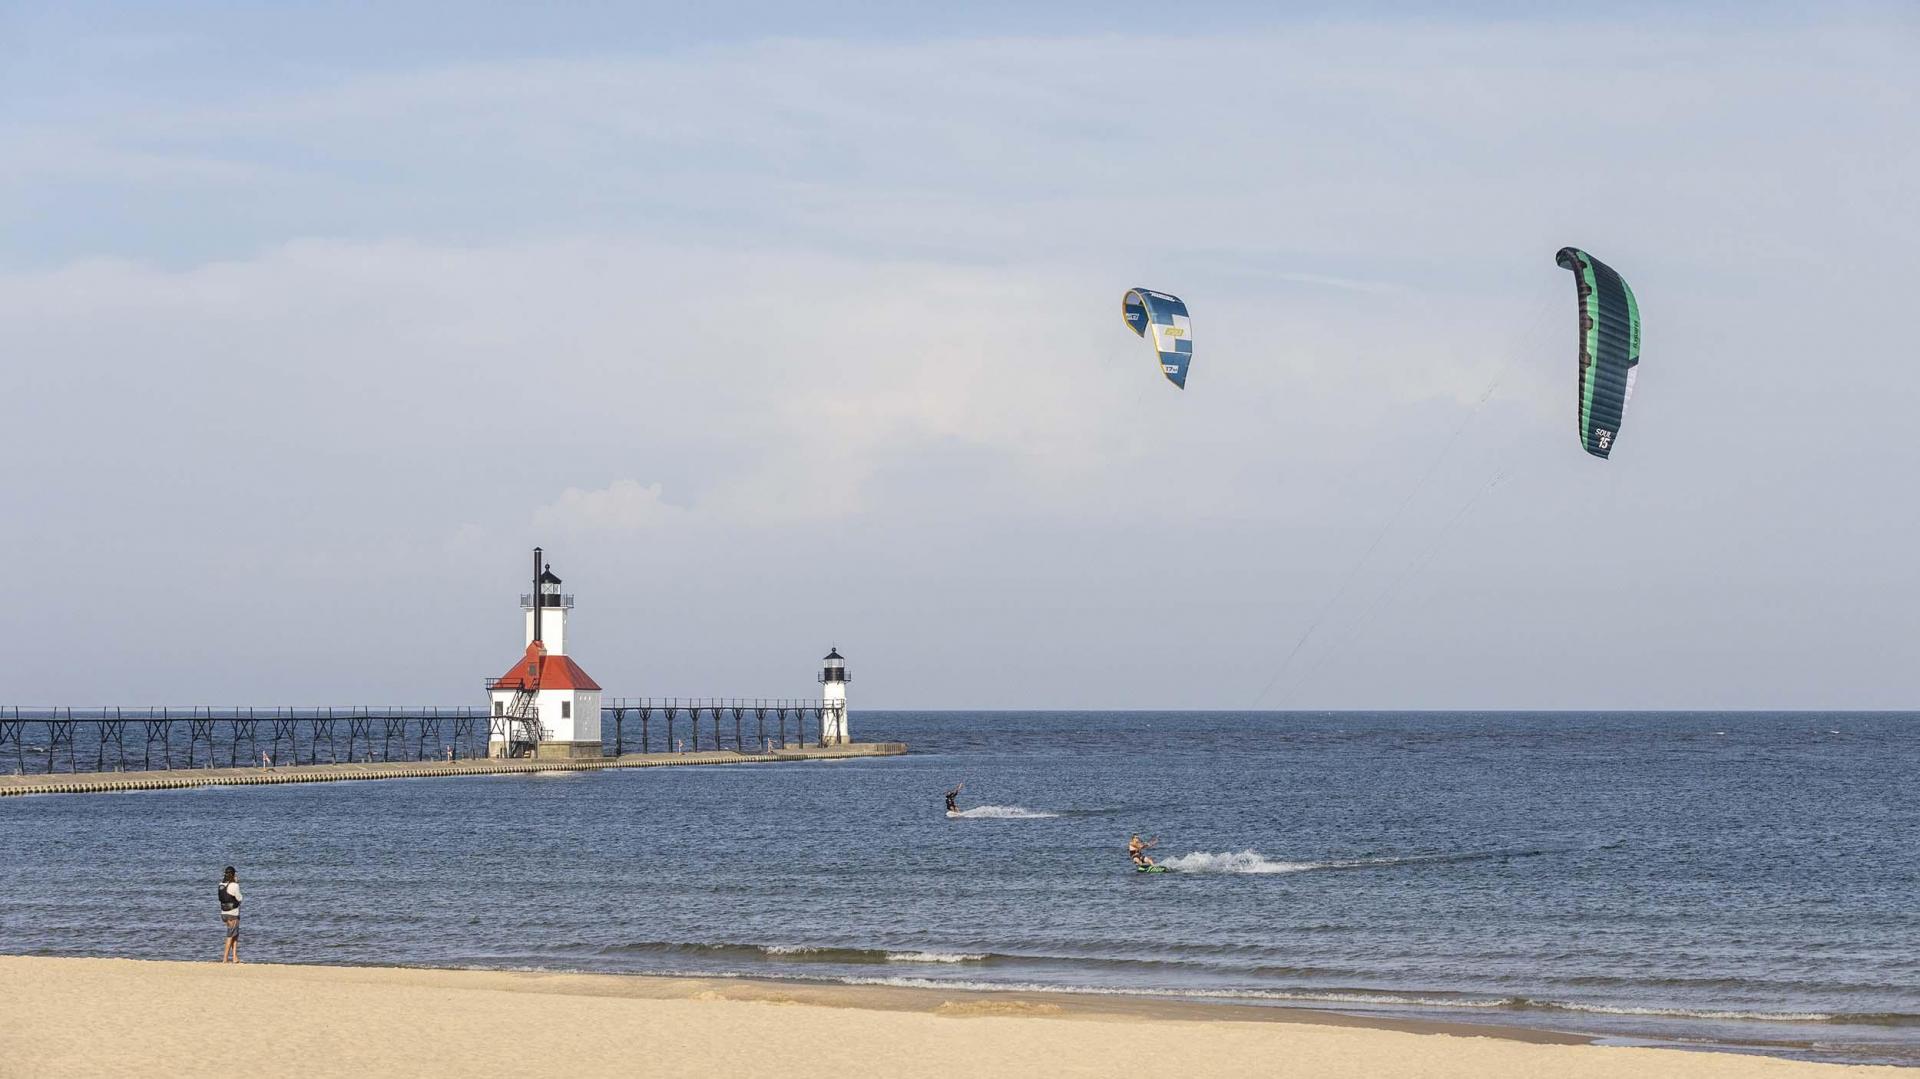 Kitesurfing in Saint Joseph, Michigan